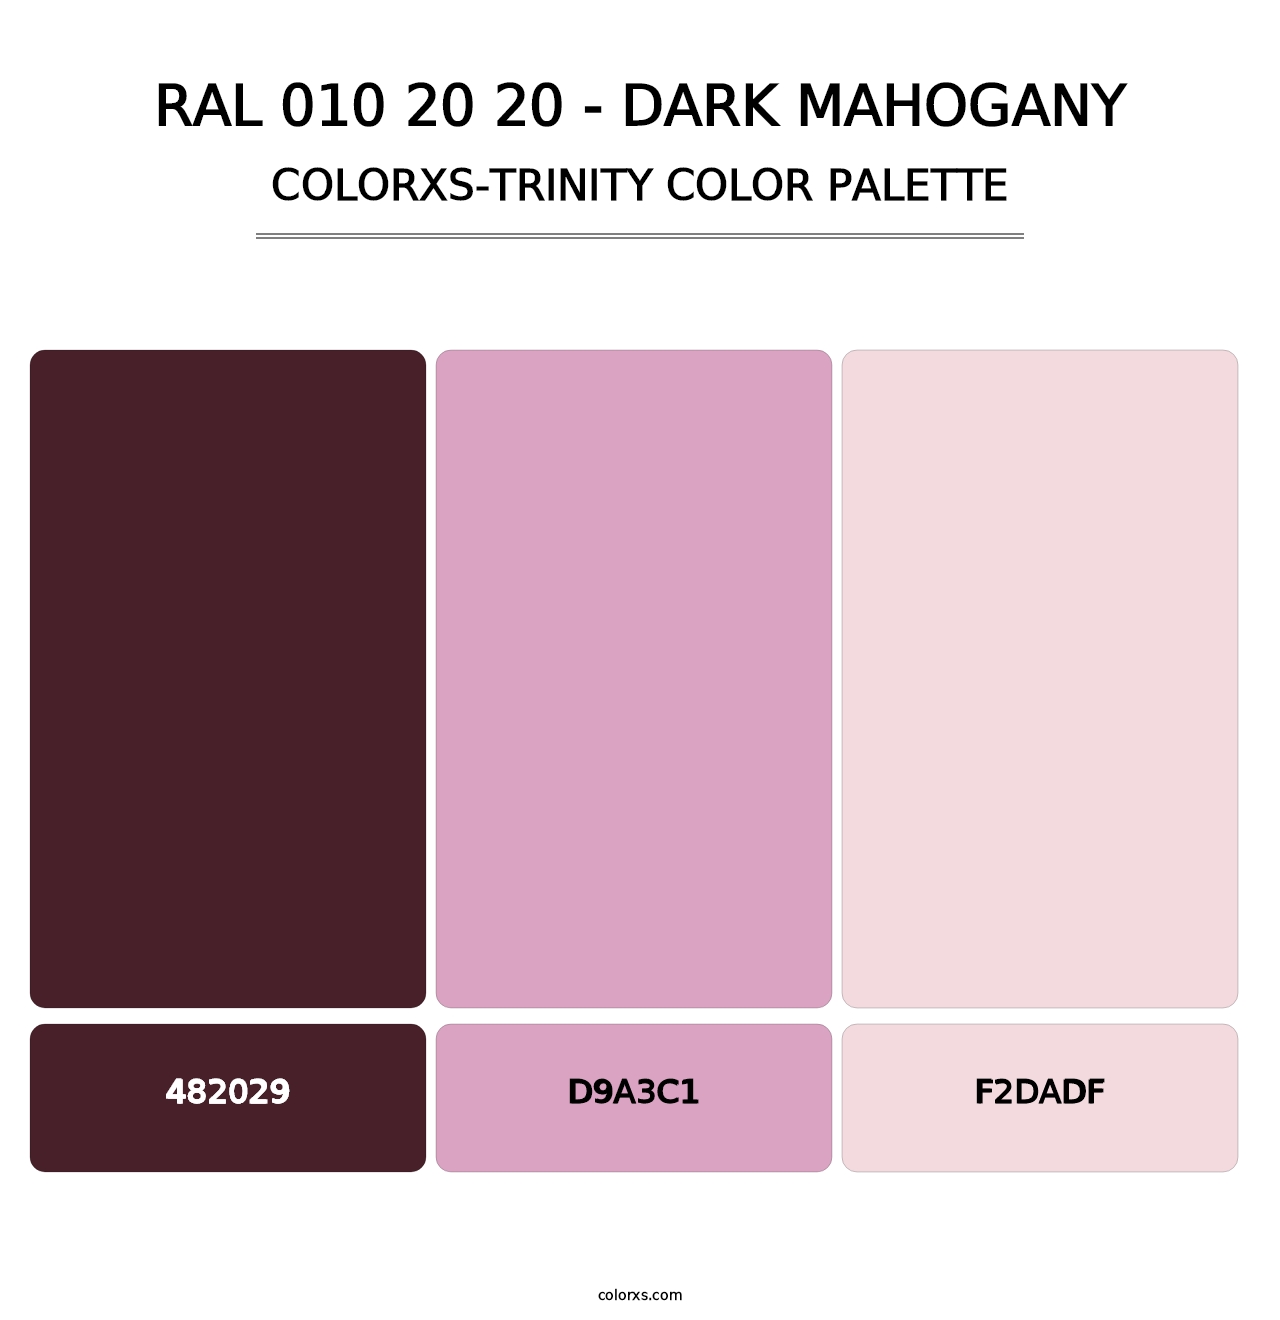 RAL 010 20 20 - Dark Mahogany - Colorxs Trinity Palette